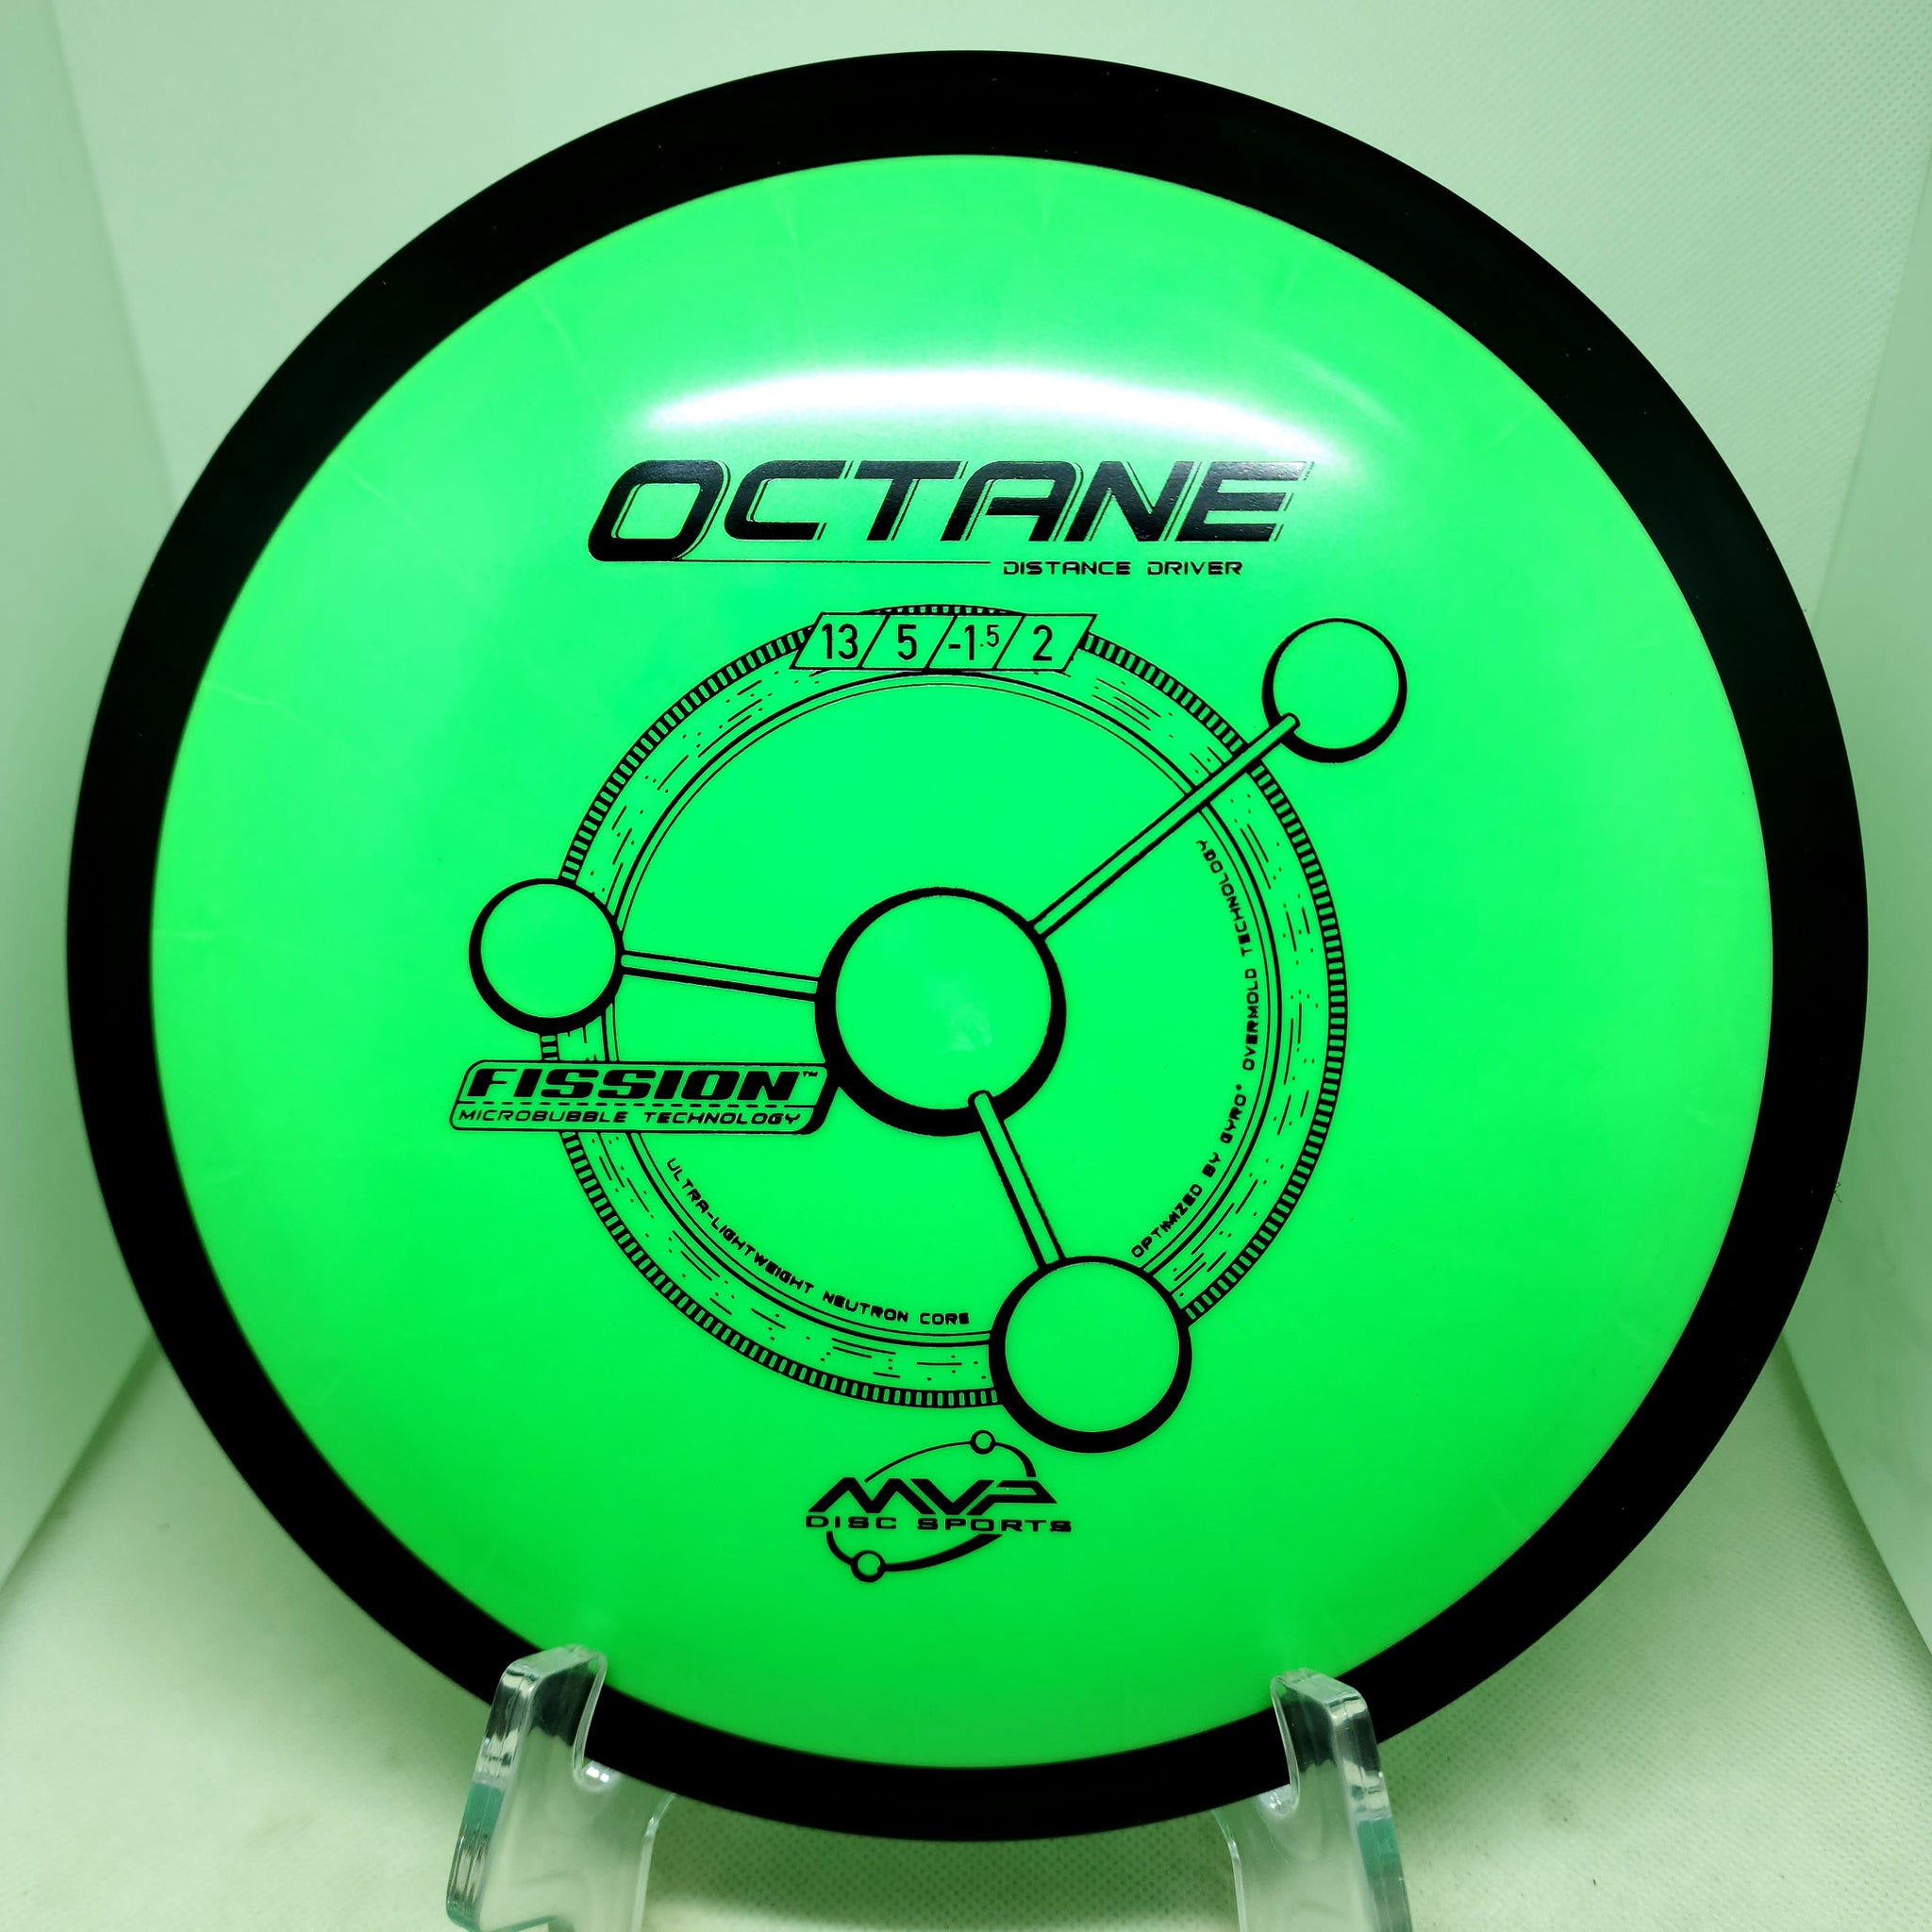 Octane (Fission)